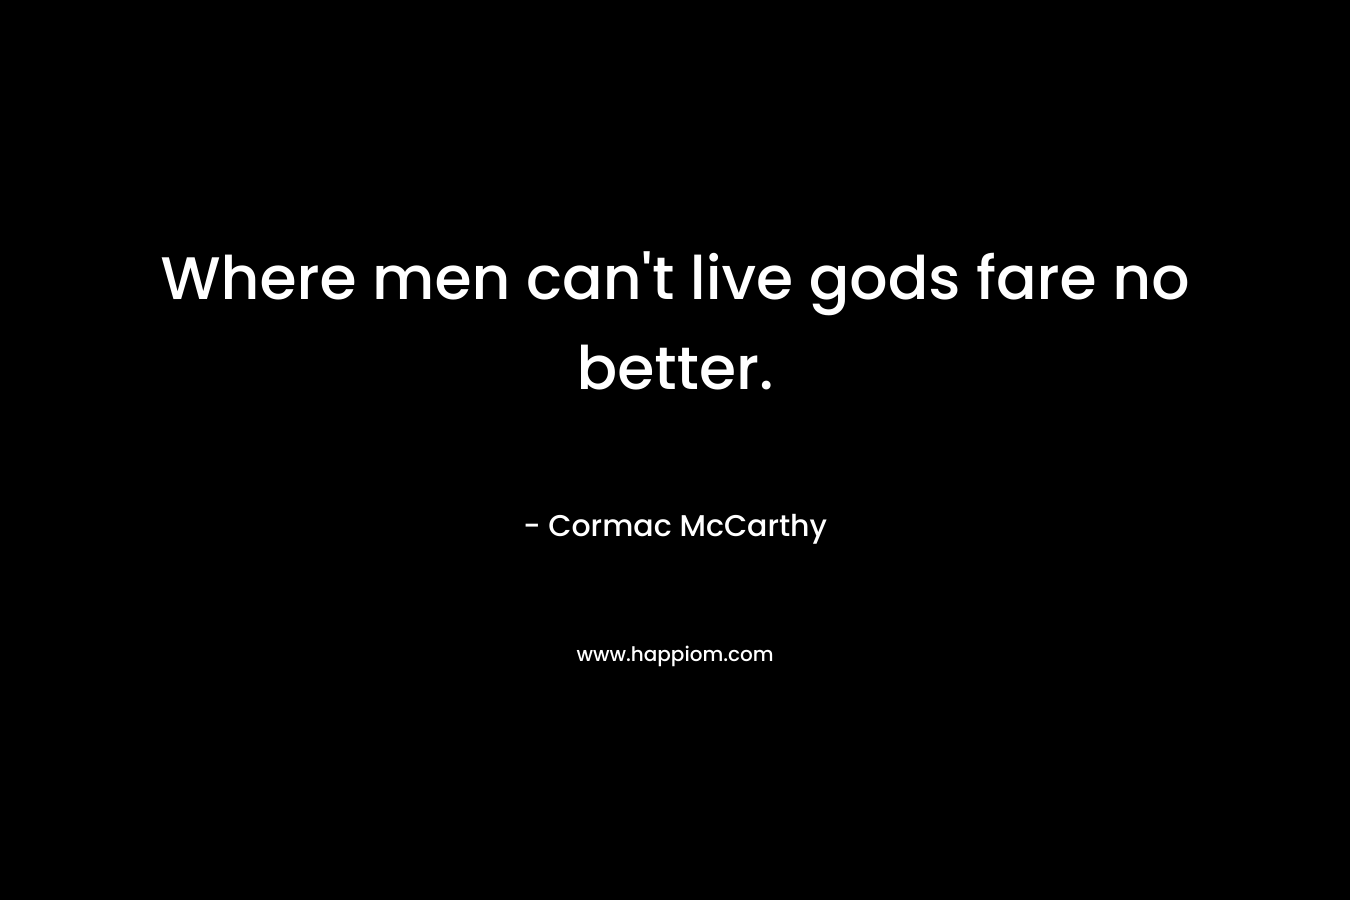 Where men can’t live gods fare no better. – Cormac McCarthy